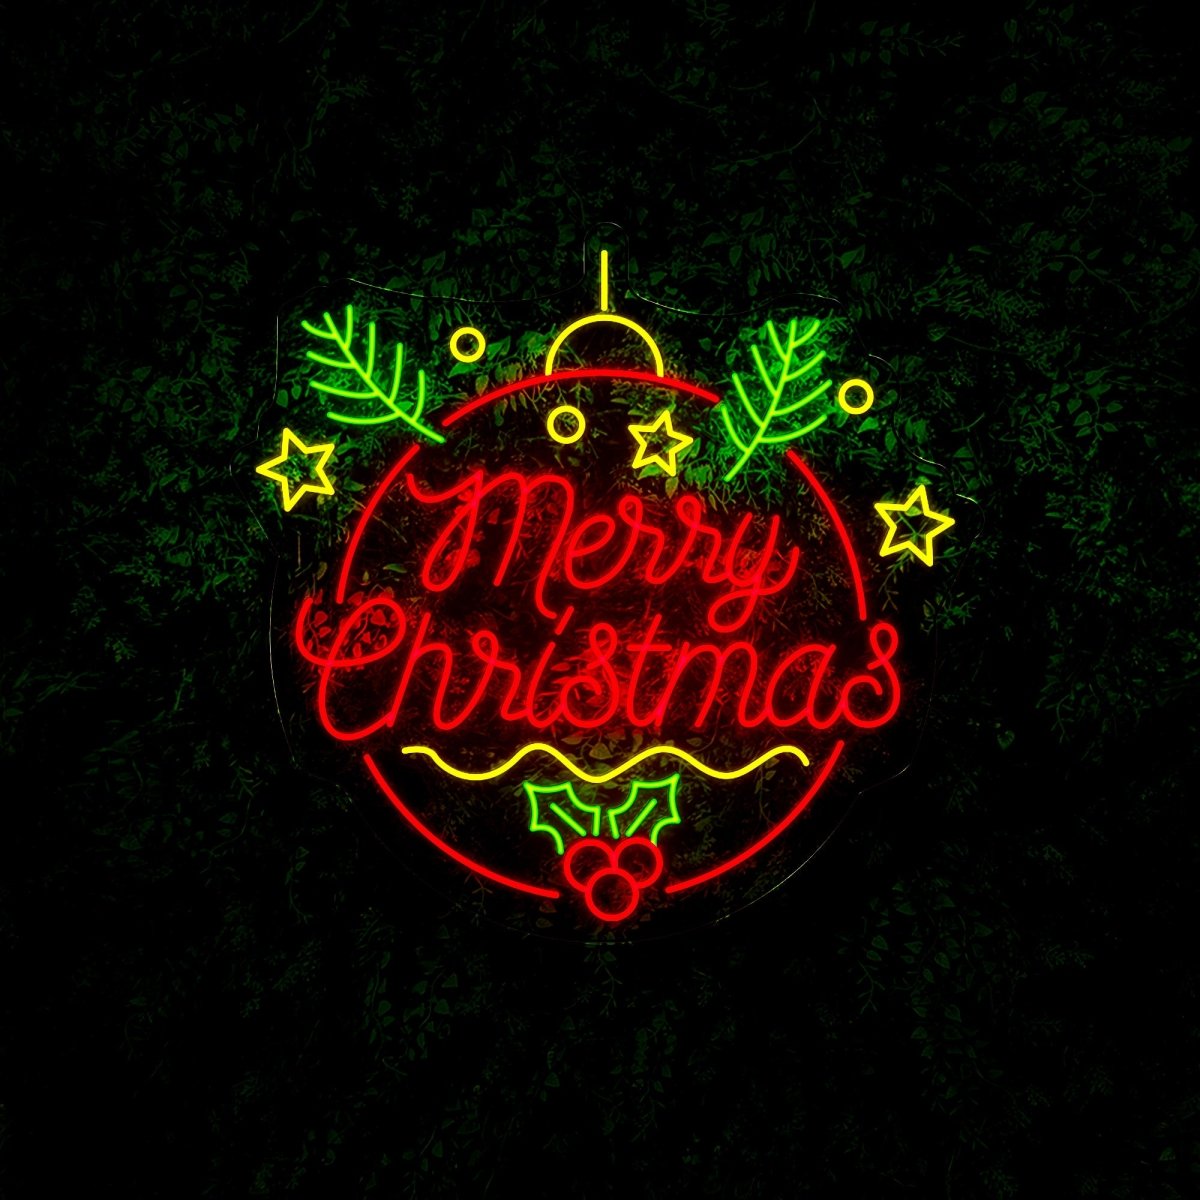 Cool Merry Christmas Led Neon Sign - Reels Custom